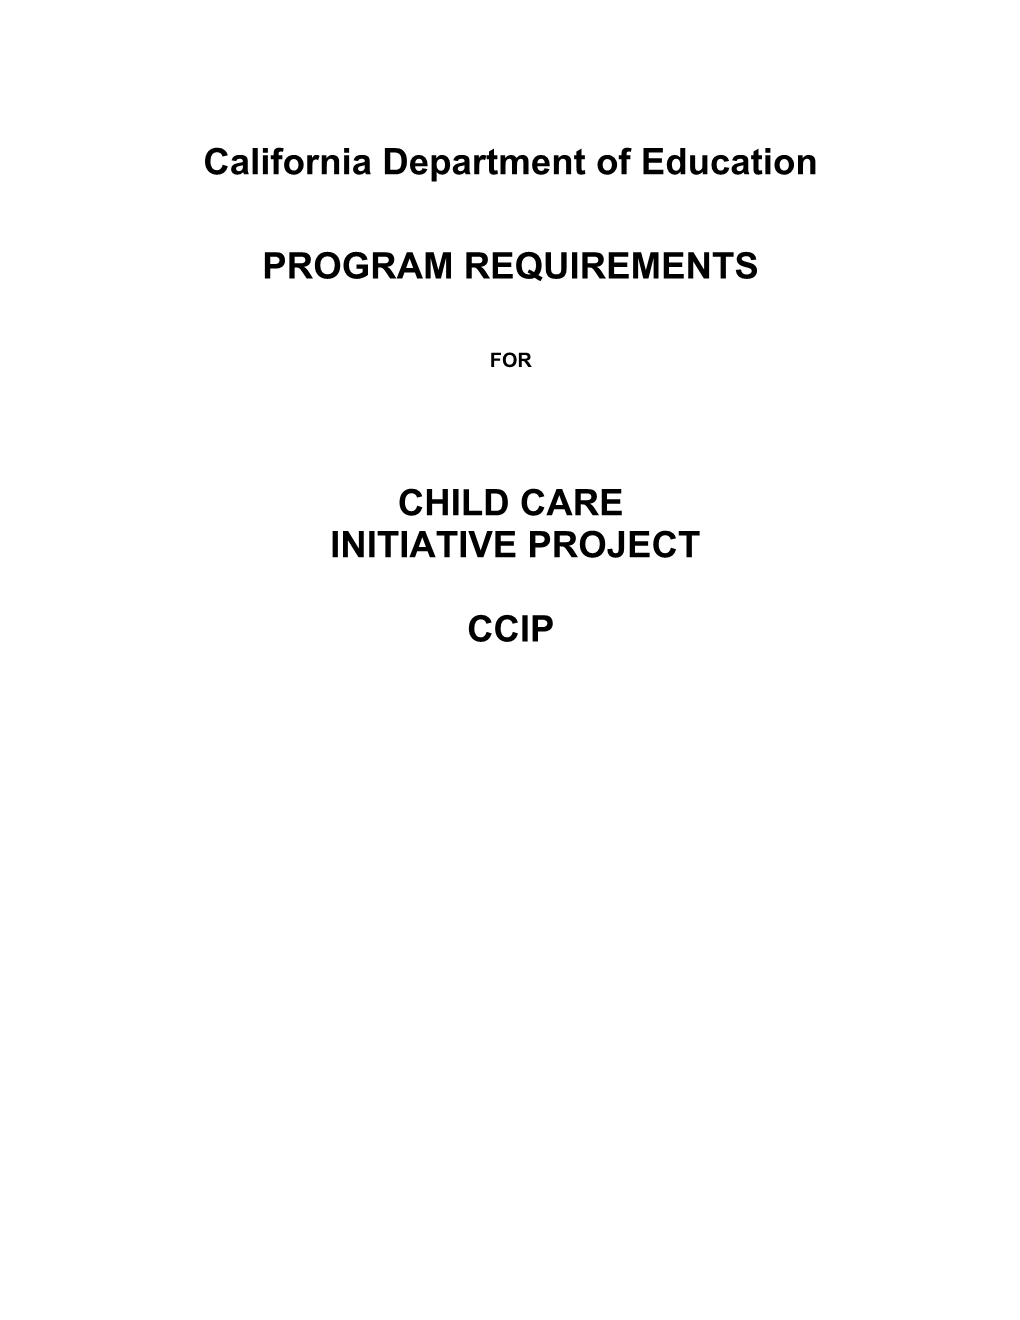 2015 Program Requirements for Child Care Initiative Project CCIP - Child Development (CA